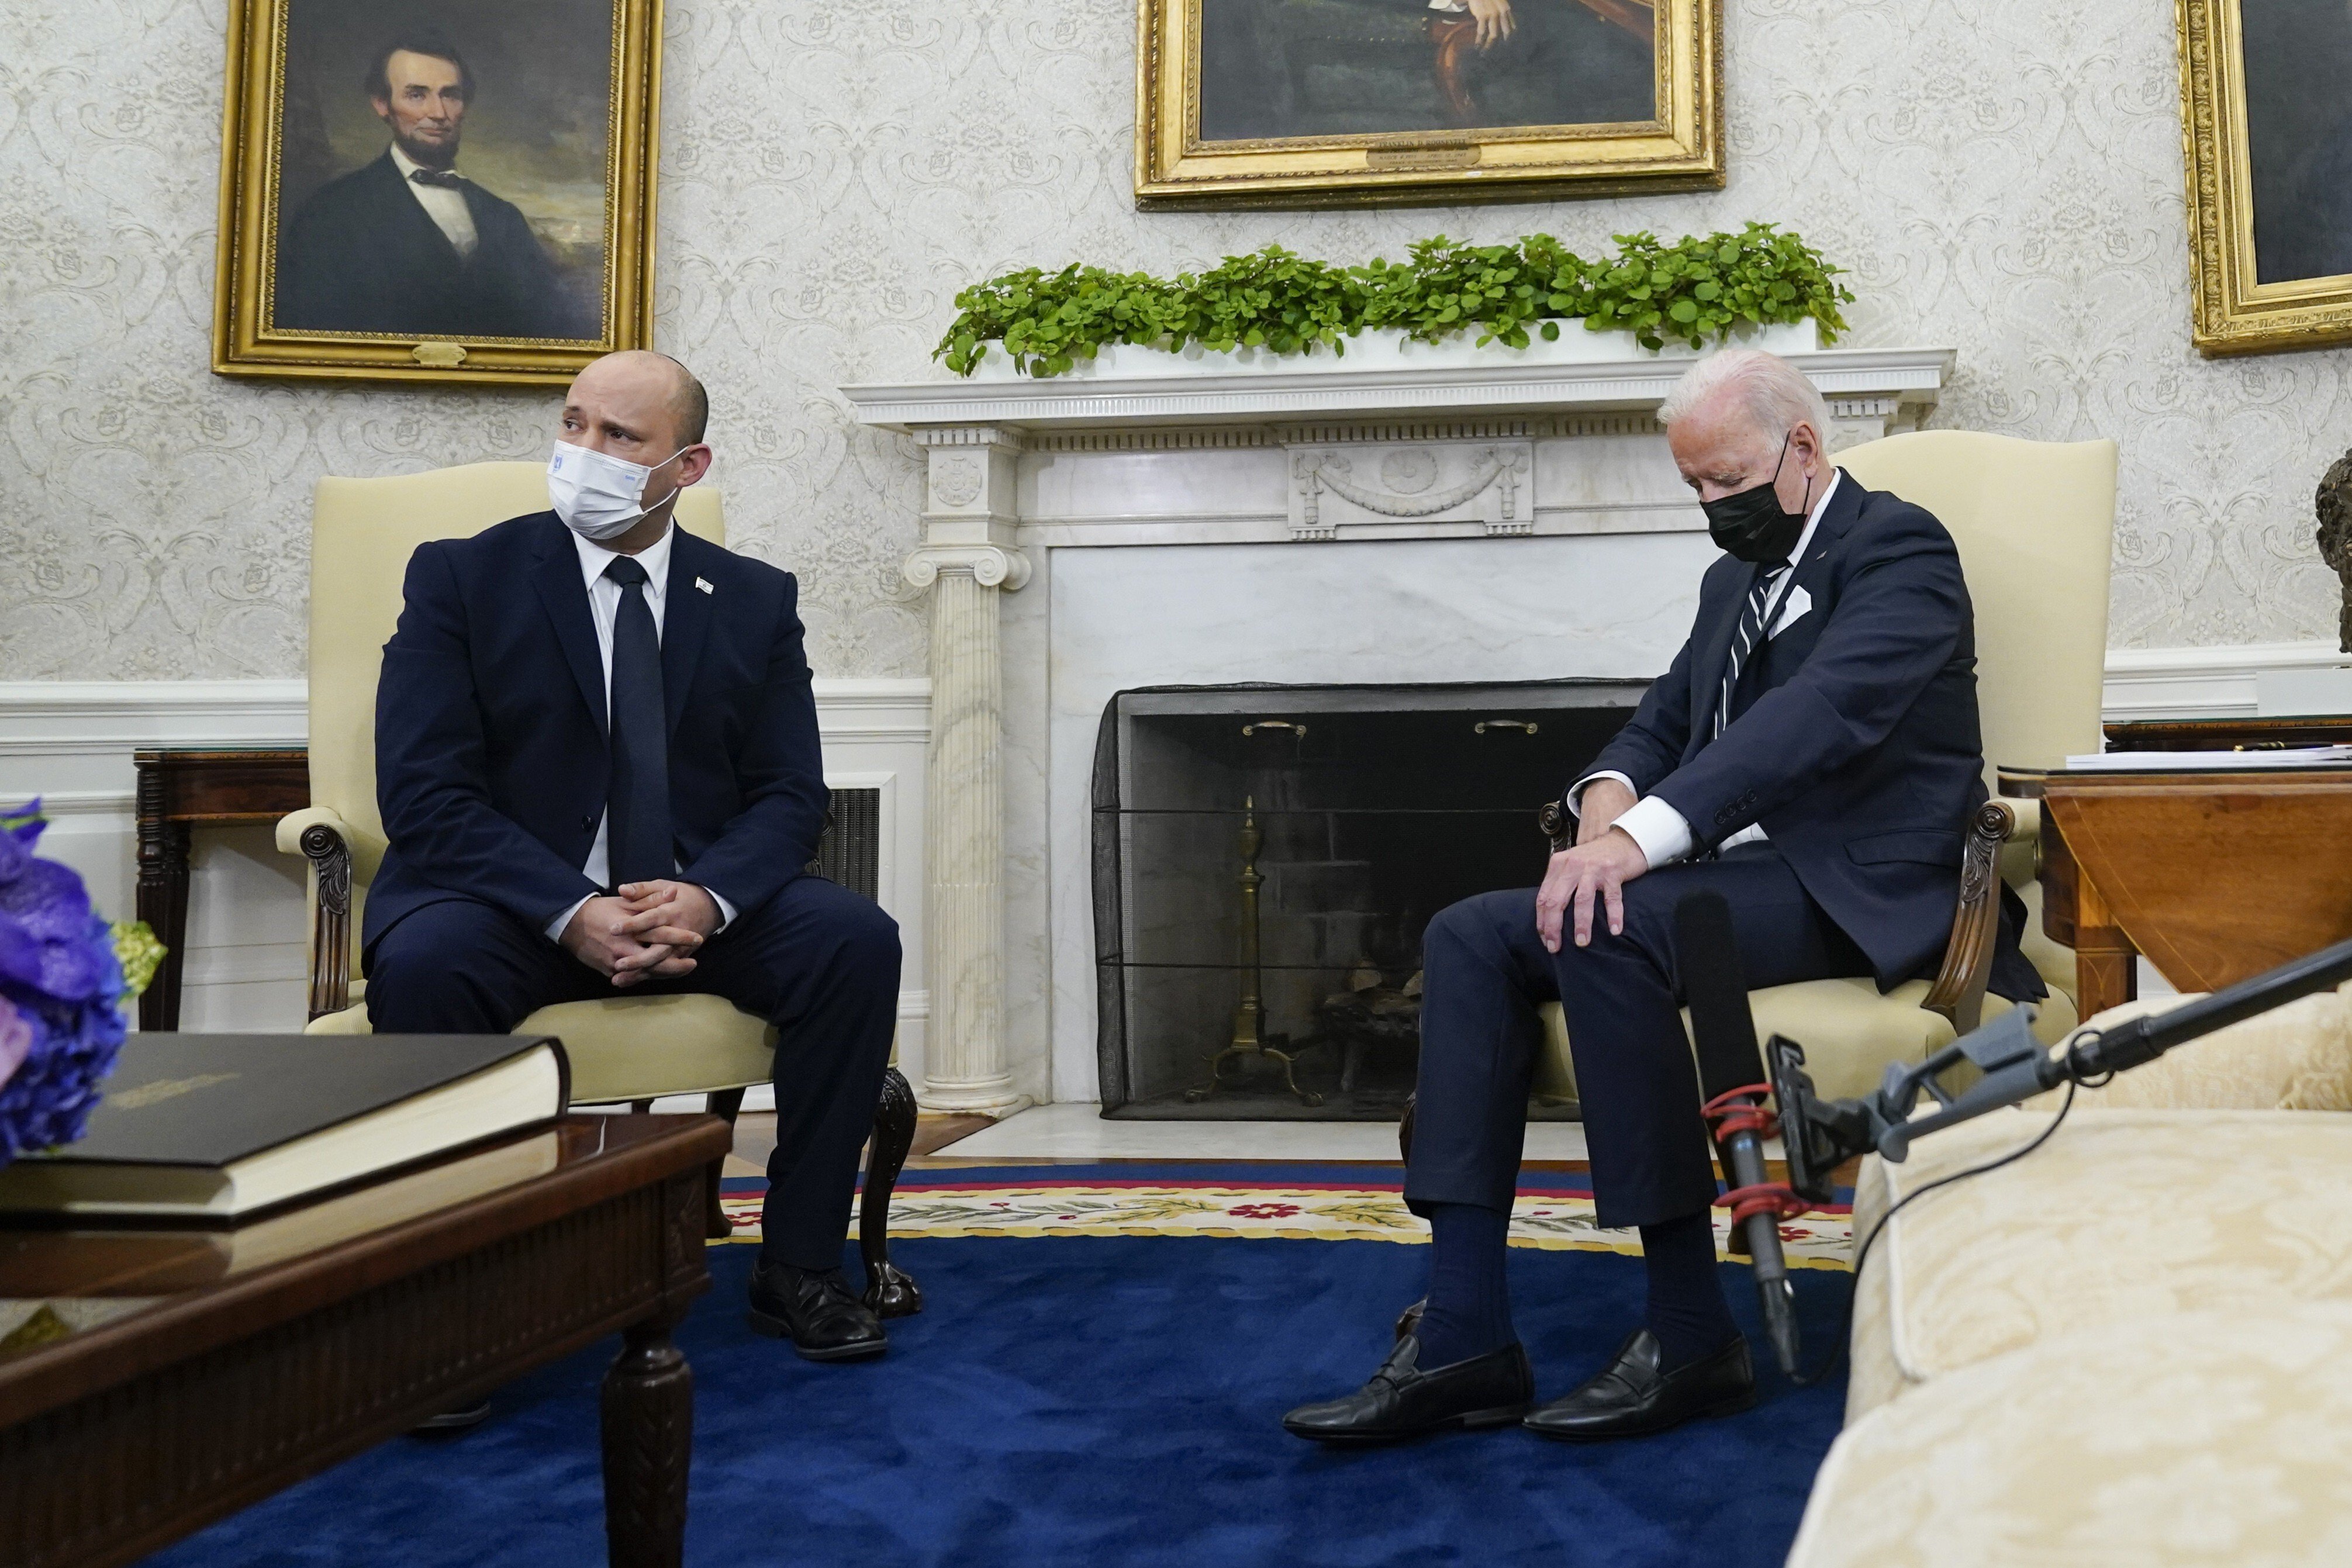 Benjamin Netanyahu suggests Joe Biden fell asleep meeting new Israeli PM in Oval Office | South China Morning Post